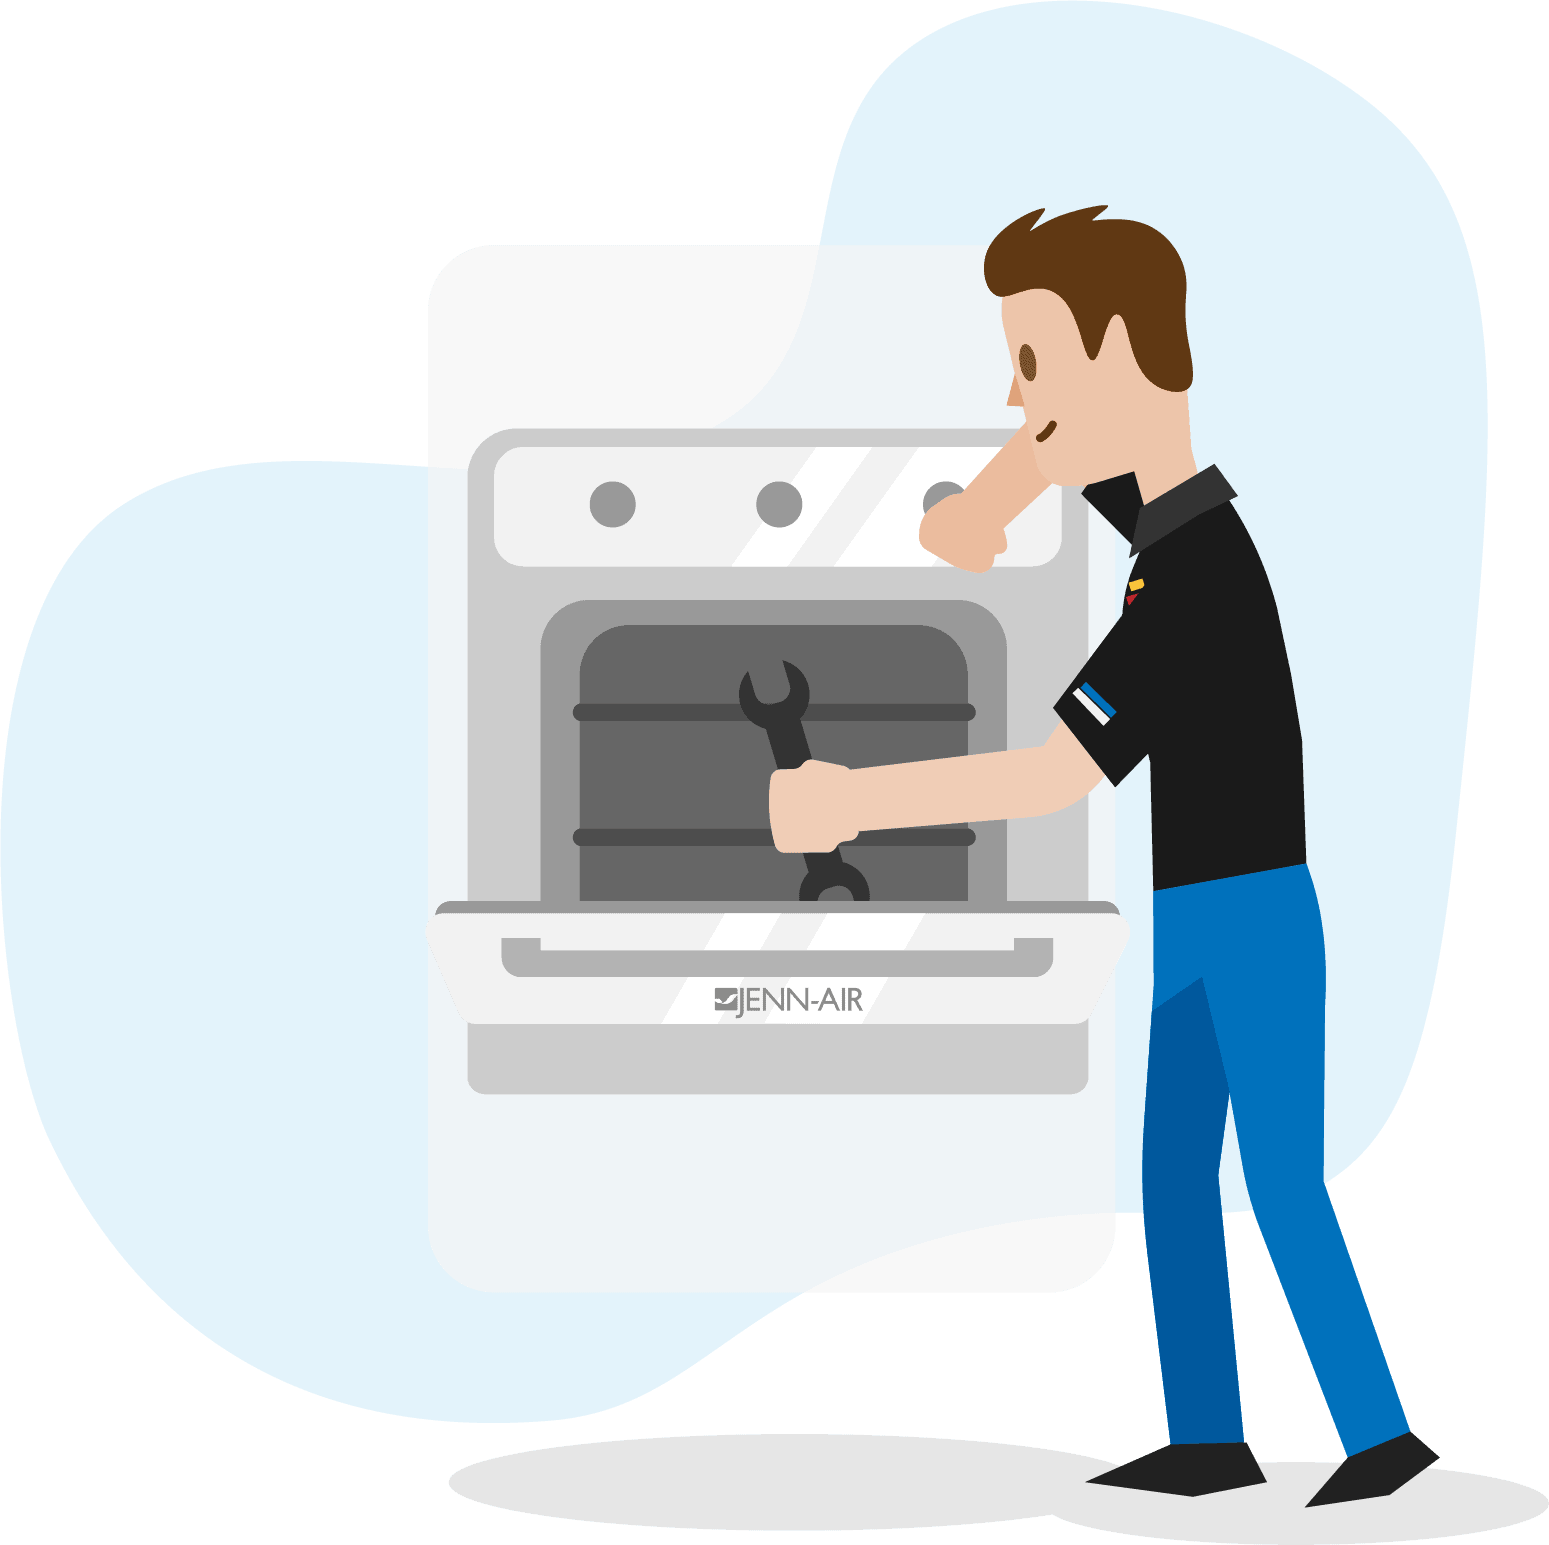 jennair oven repair